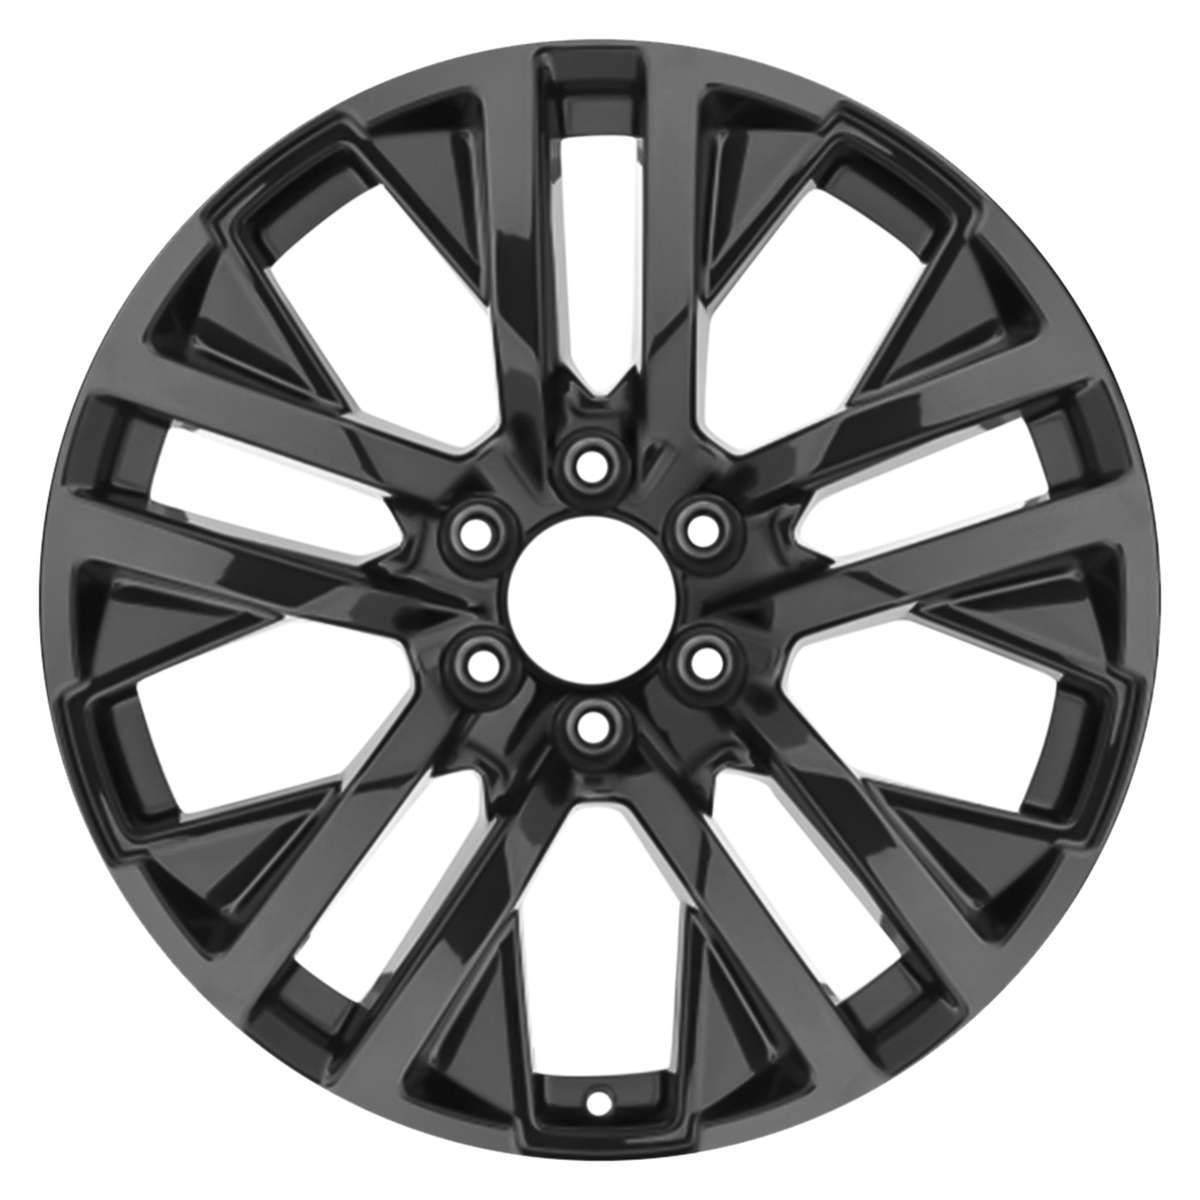 2021 GMC Yukon XL 22" OEM Wheel Rim W5903B